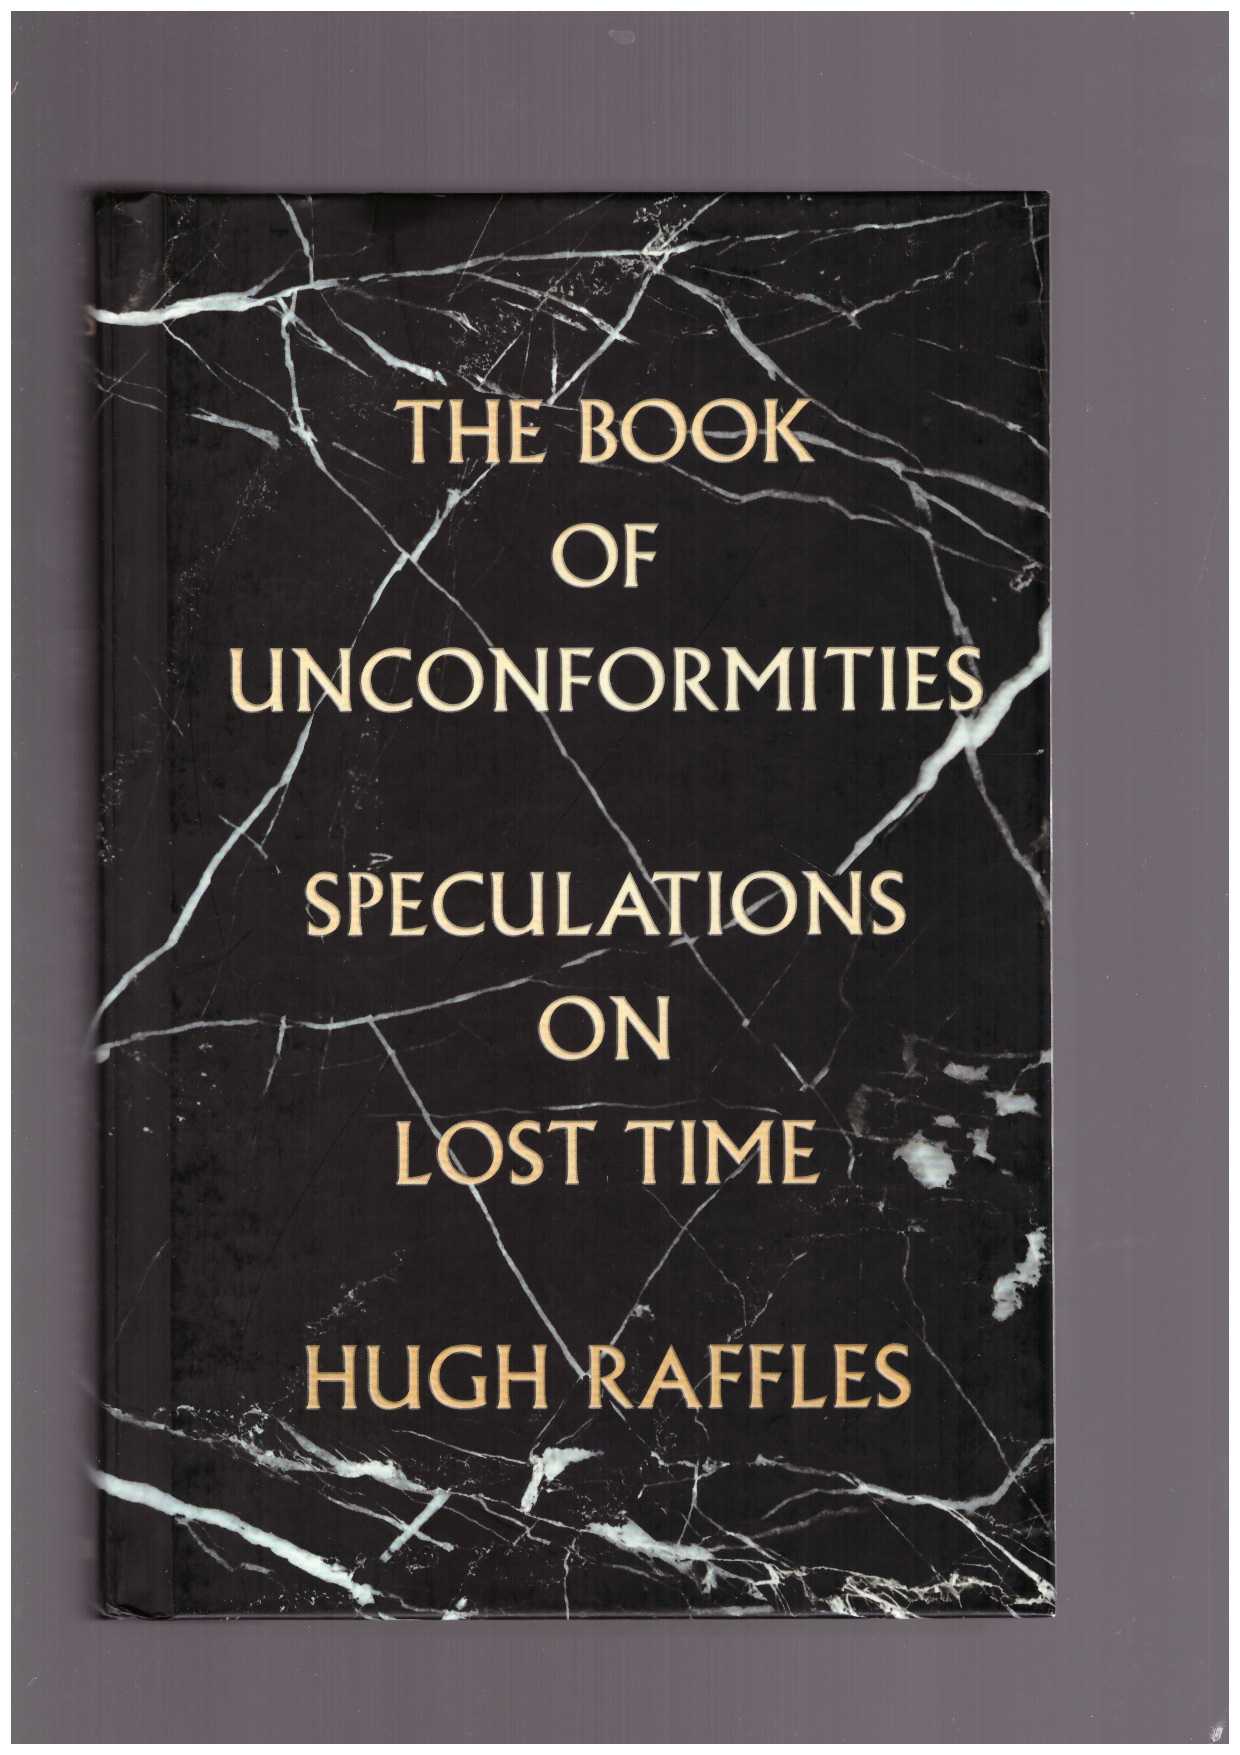 RAFFLES, Hugh - The Book of Unconformities